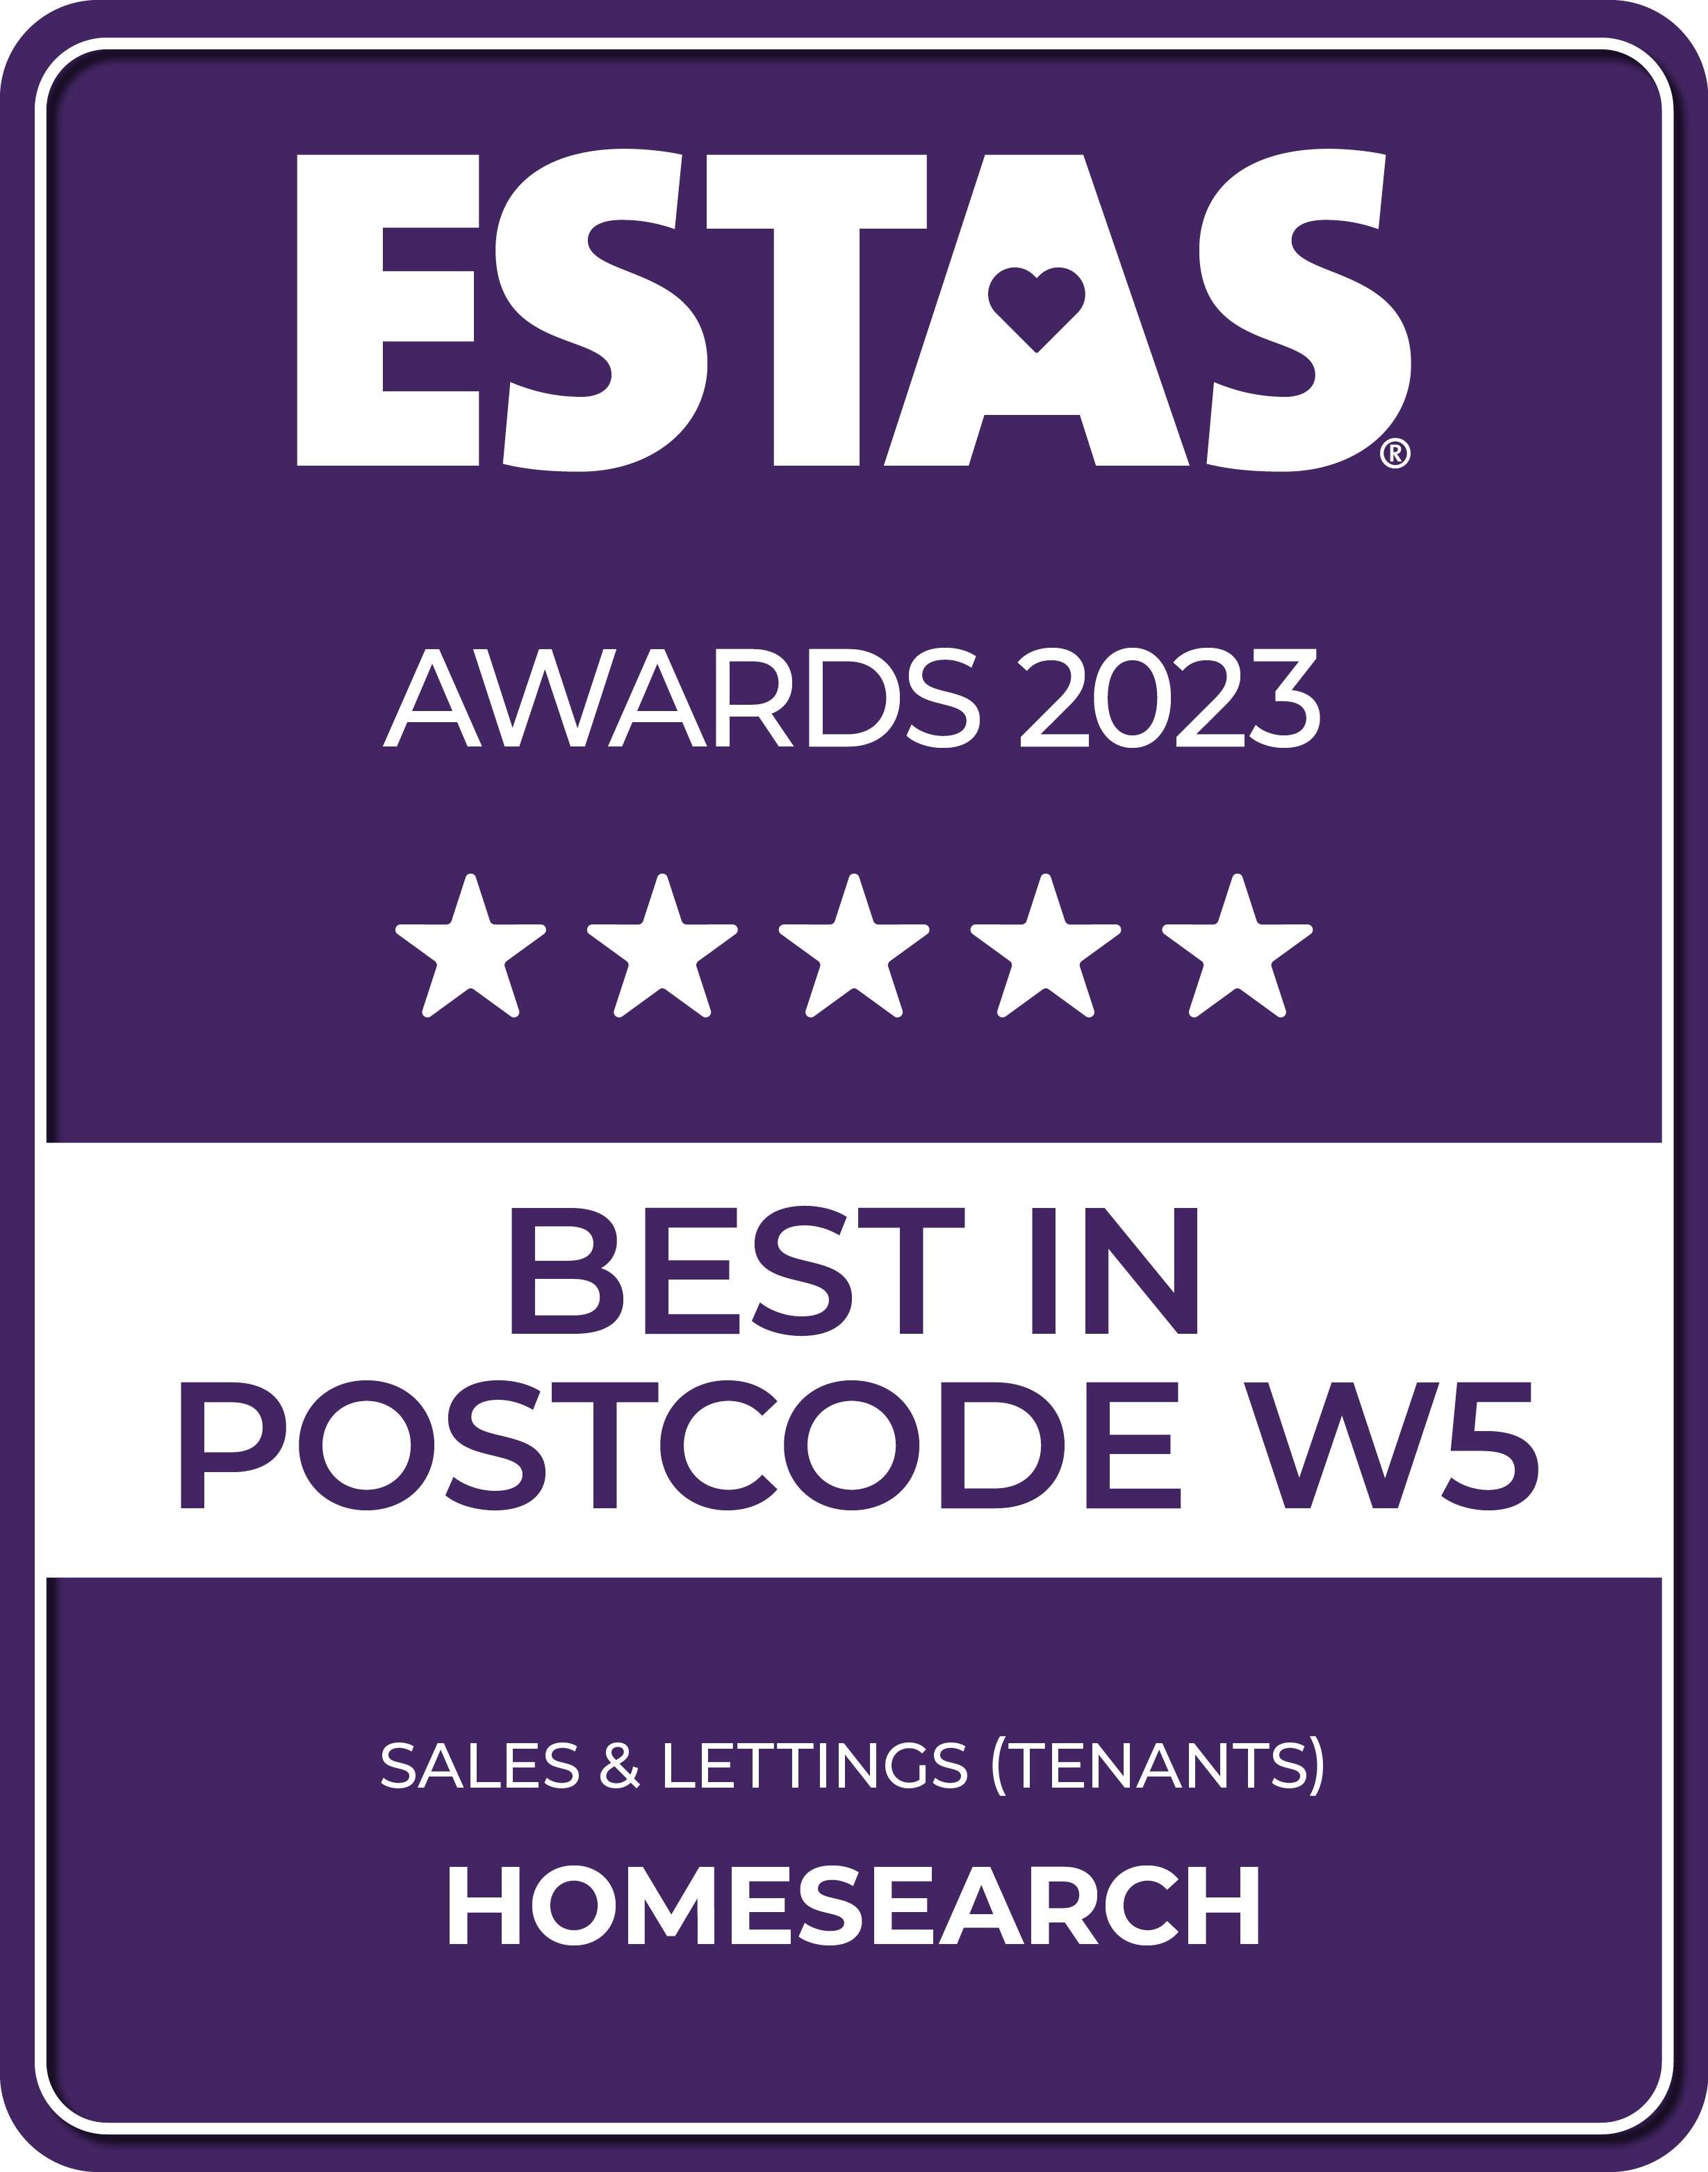 ESTAS best in postcode W5 winner 2023